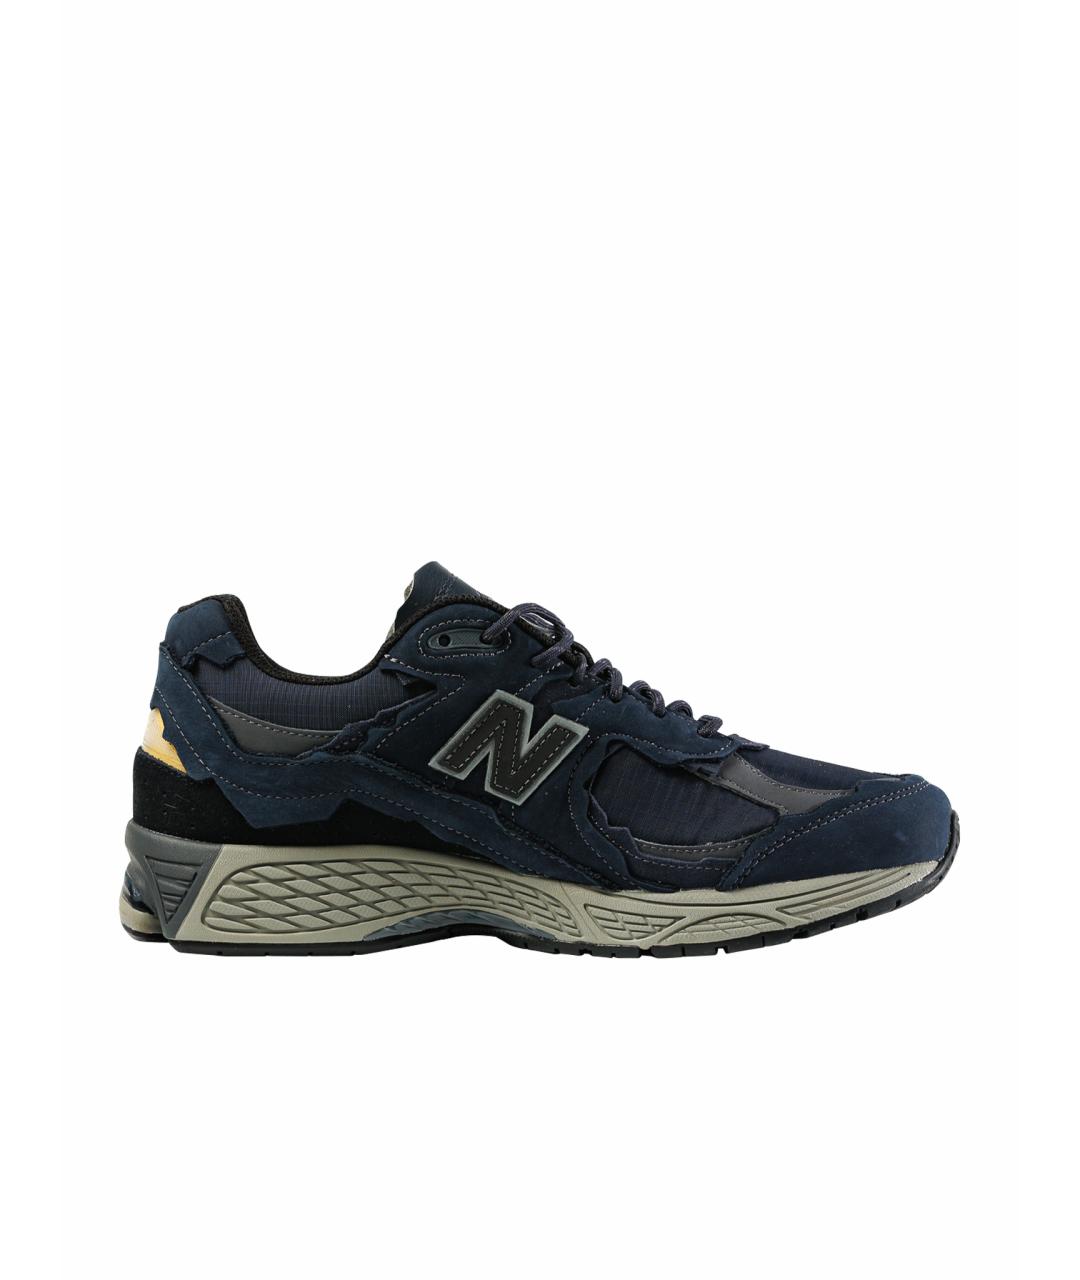 NEW BALANCE Темно-синие синтетические низкие кроссовки / кеды, фото 1